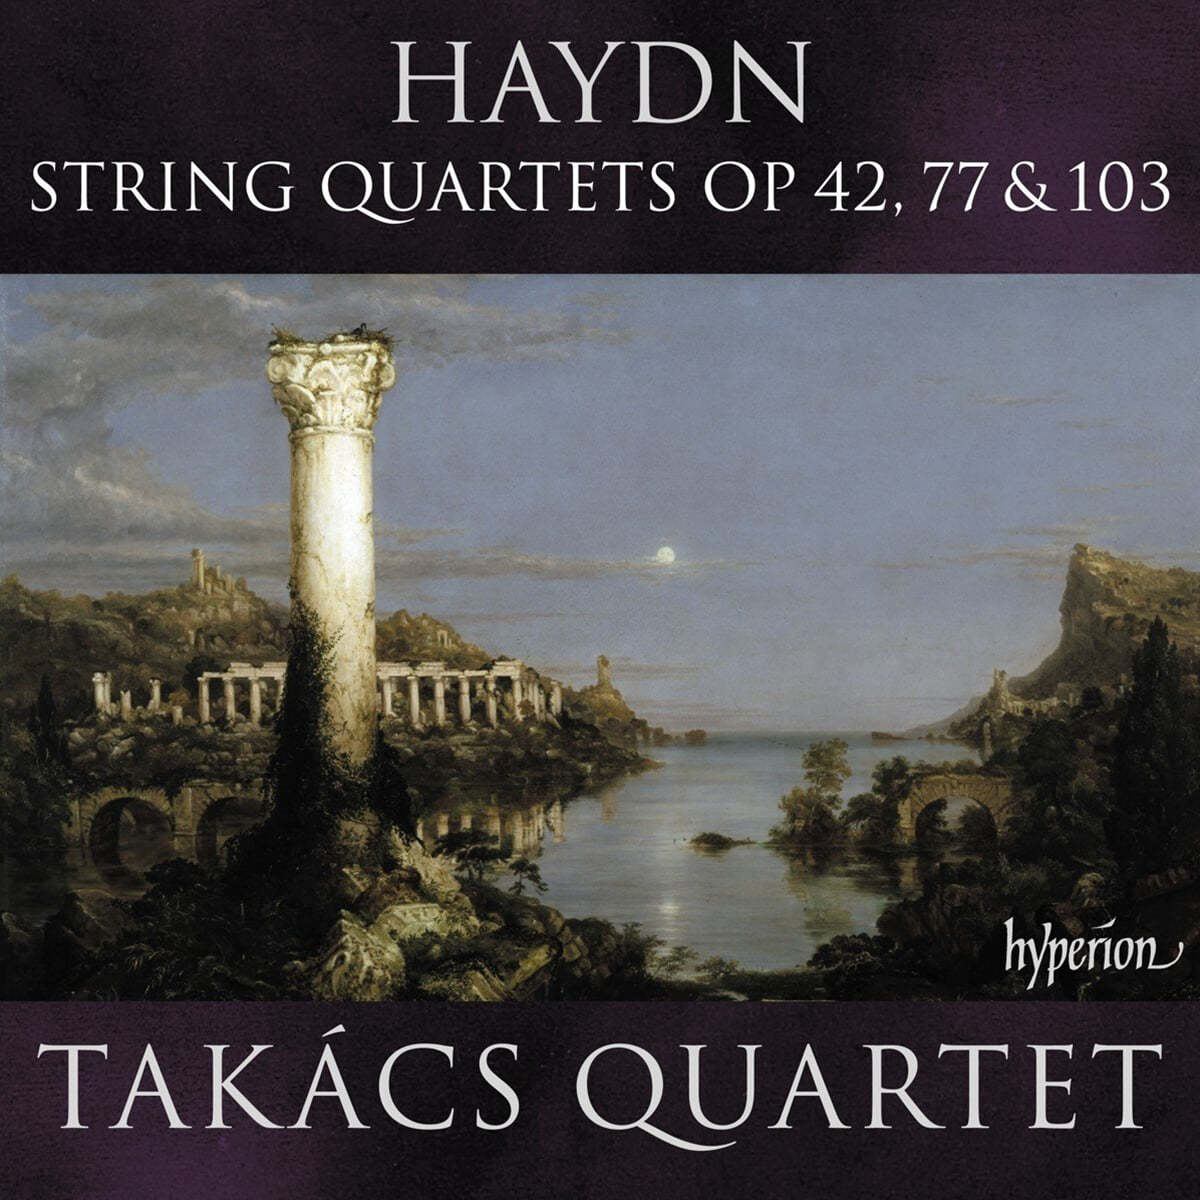 Takacs Quartet 하이든: 현악 4중주 Op.77, Op.42, Op.103 - 타카치 사중주단 (Haydn: String Quartets)